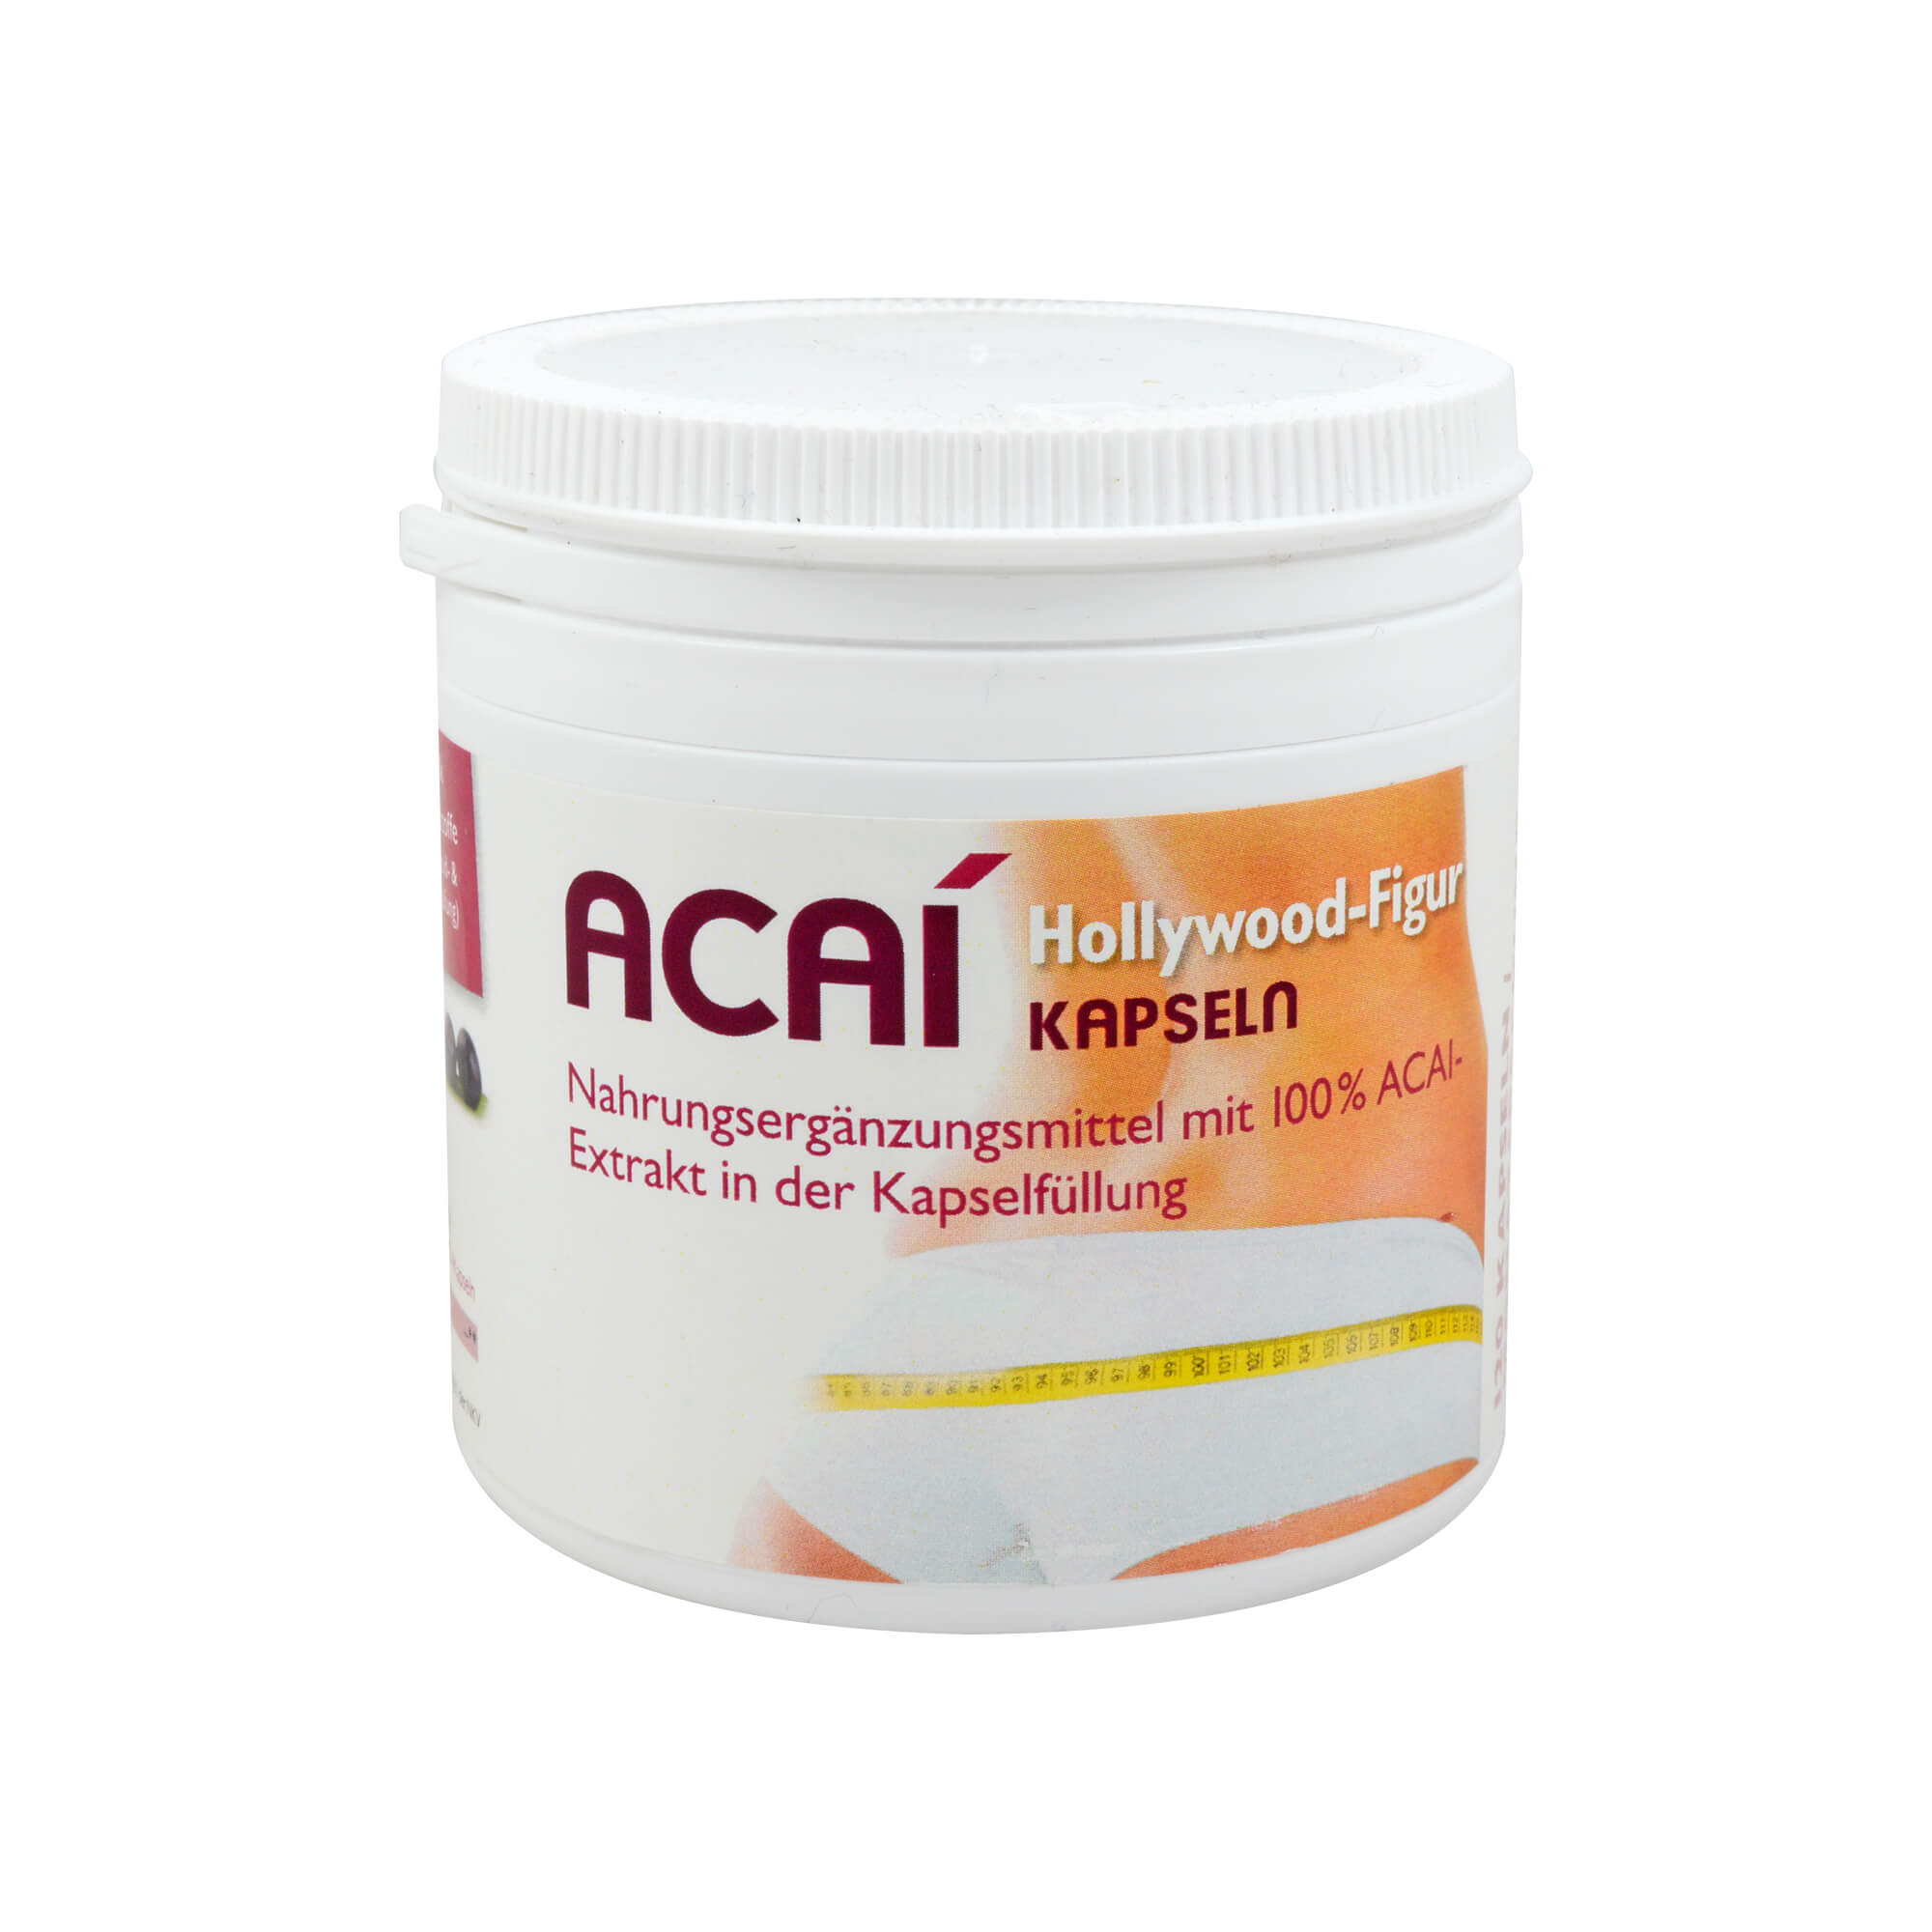 Nahrungsergänzungsmittel mit 100% Acai-Extract.